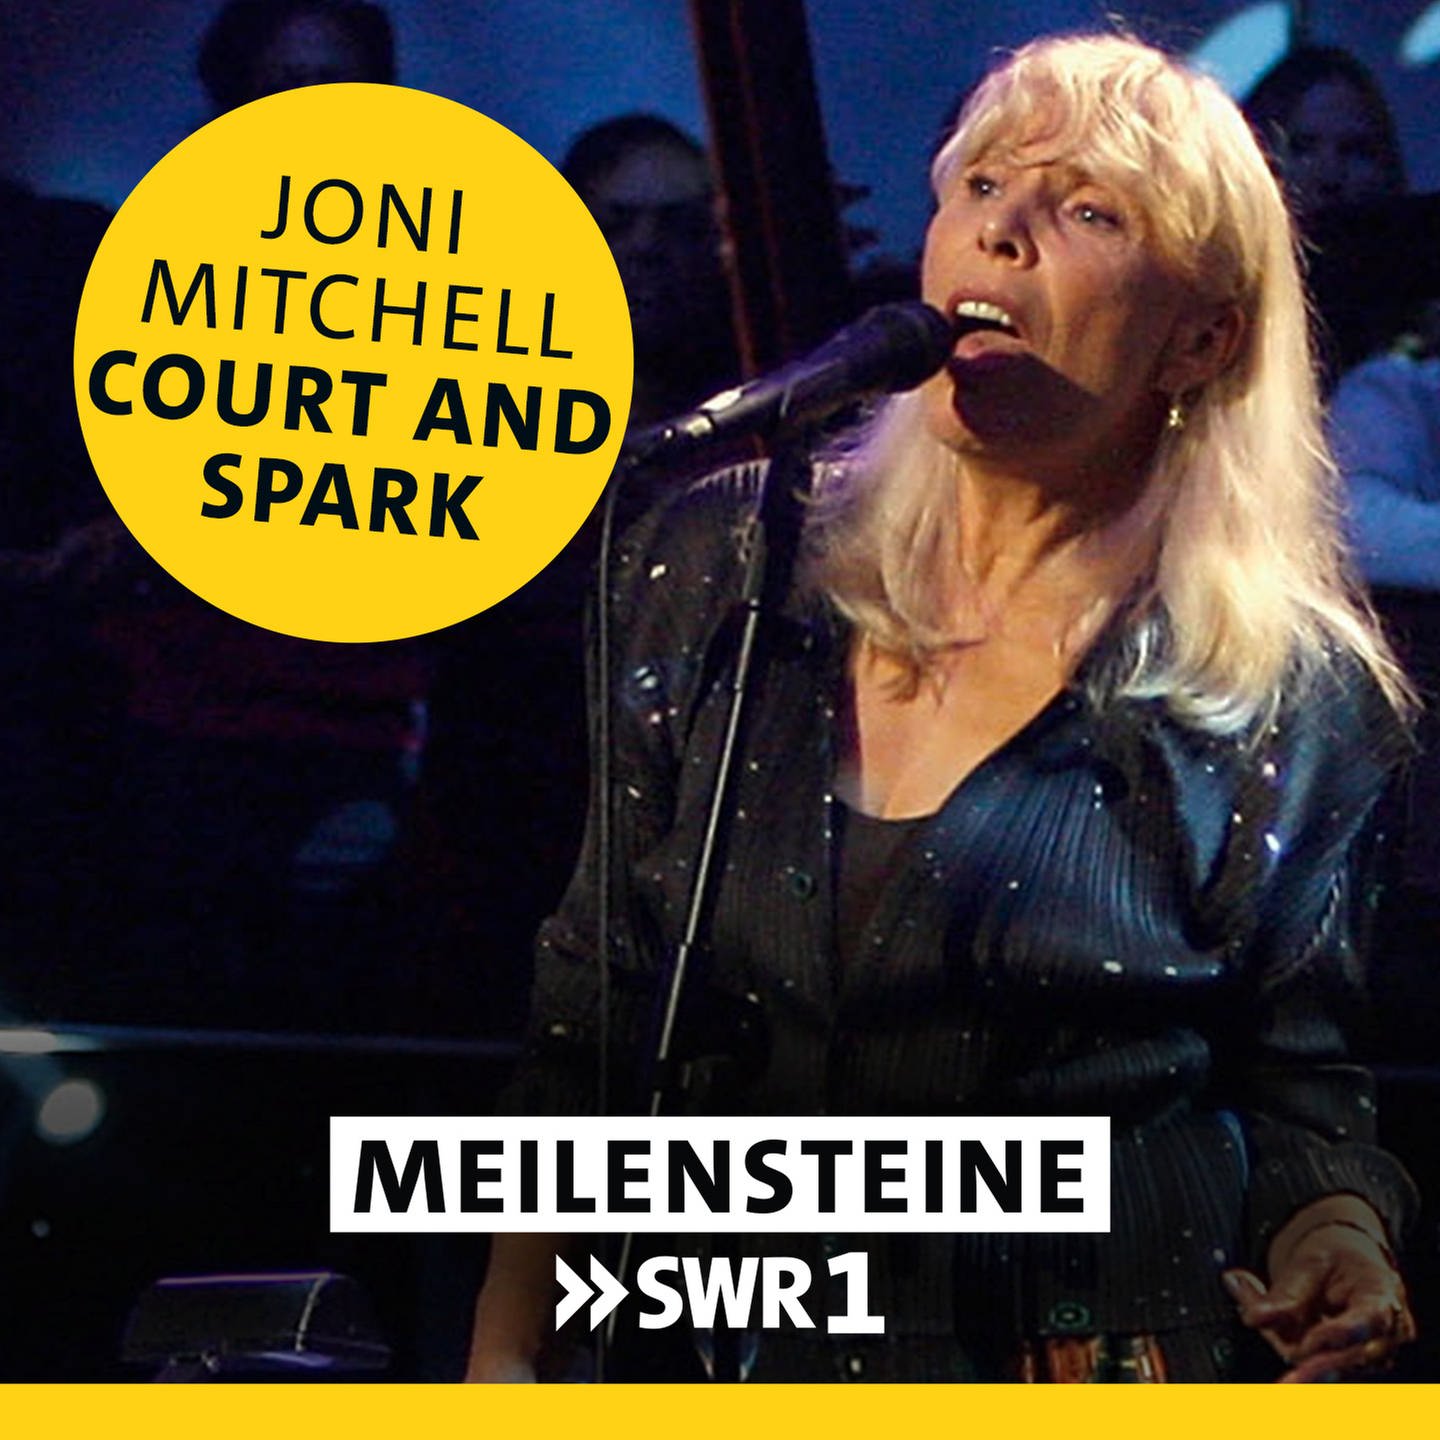 Joni Mitchell – "Court and Spark"